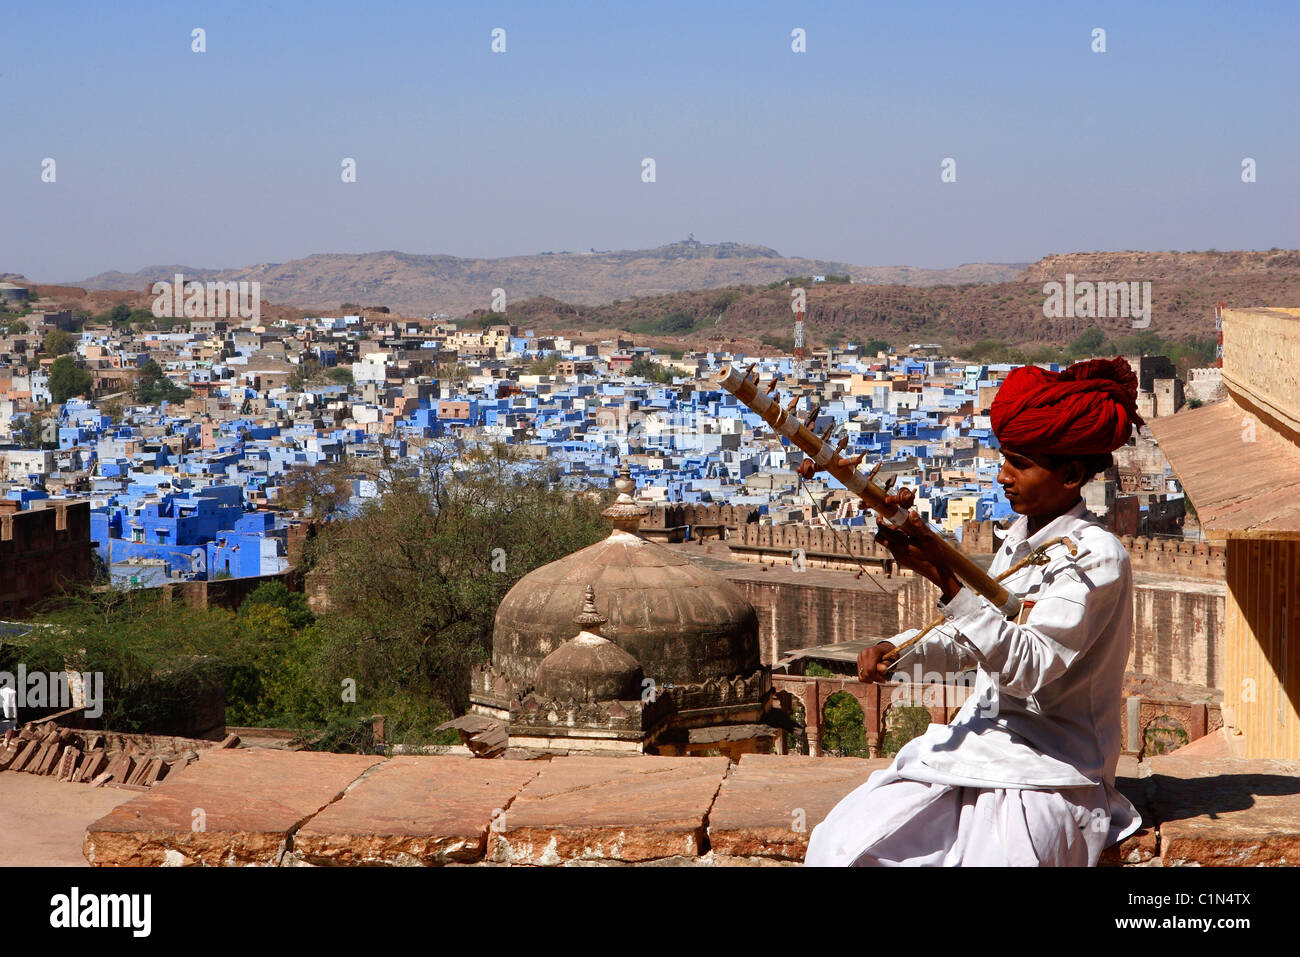 L'Inde, Rajasthan, Jodhpur, la ville bleue Banque D'Images